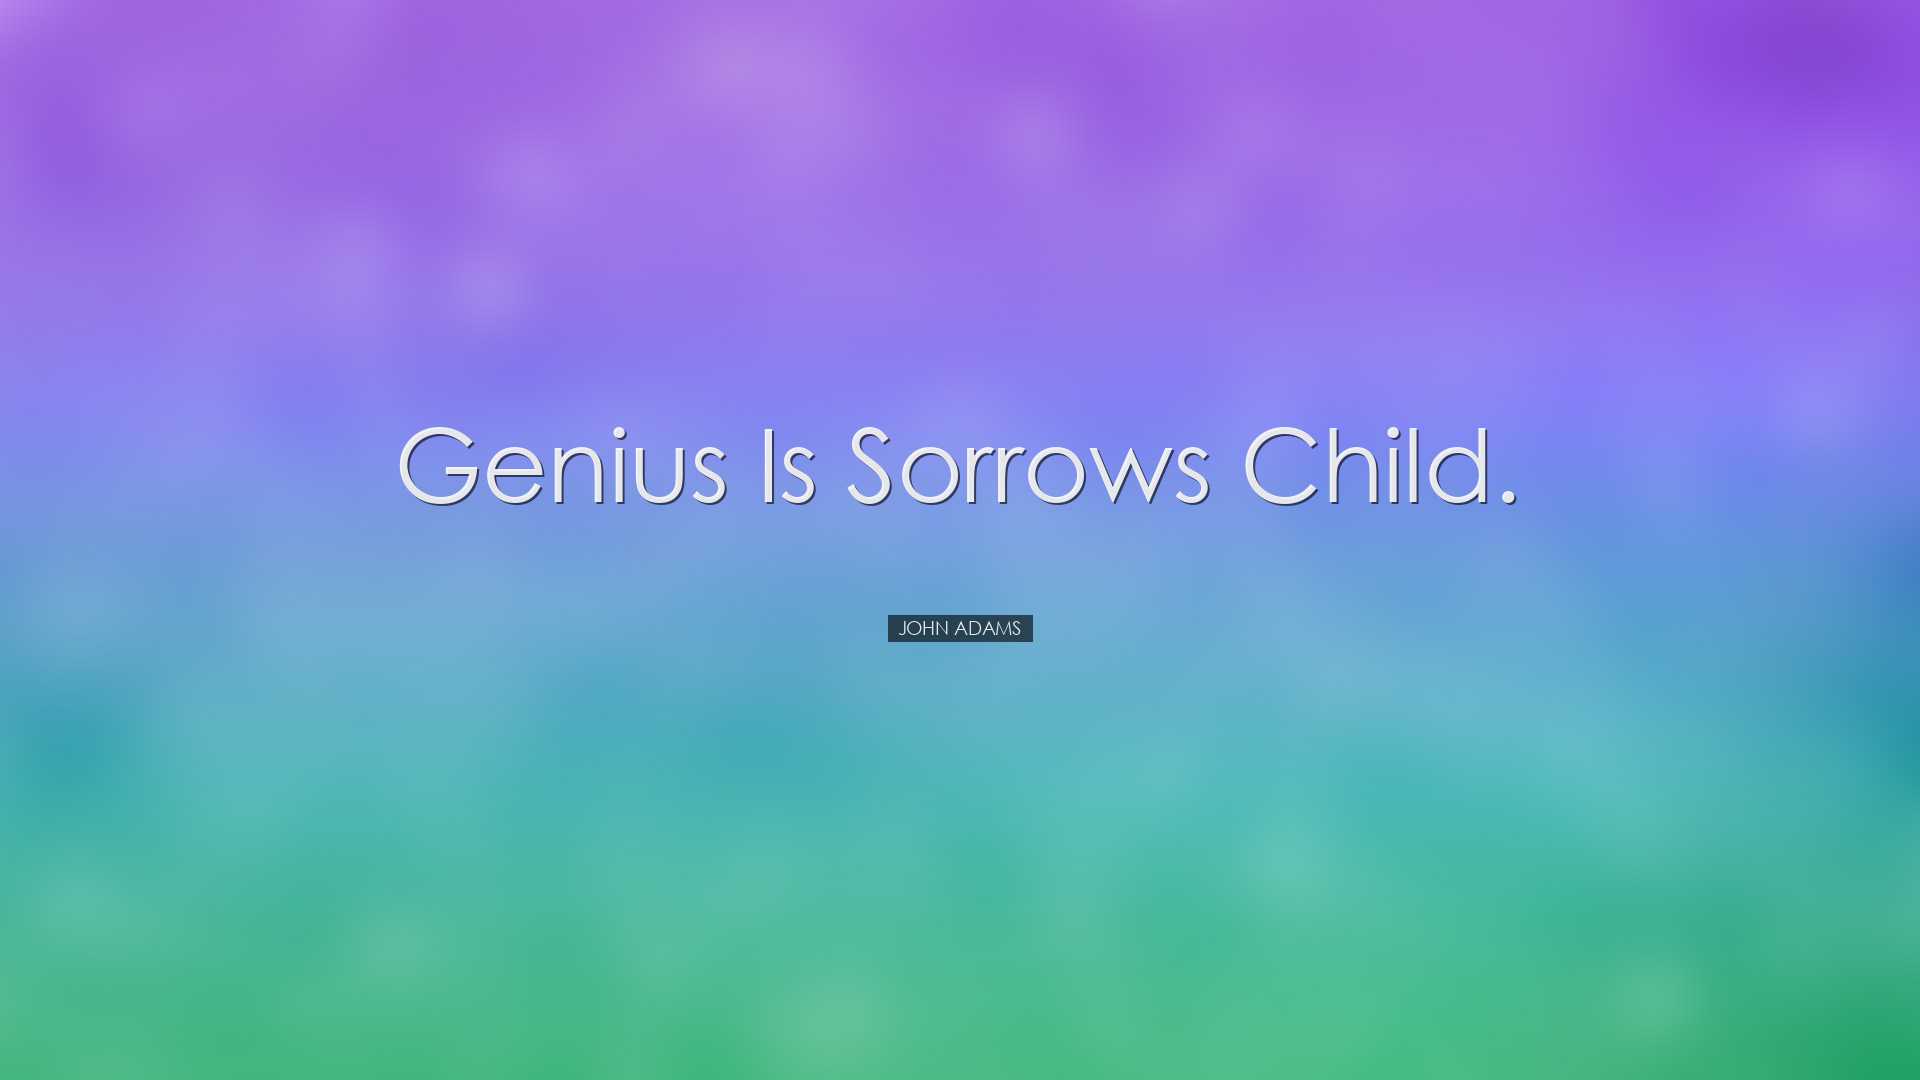 Genius is sorrows child. - John Adams